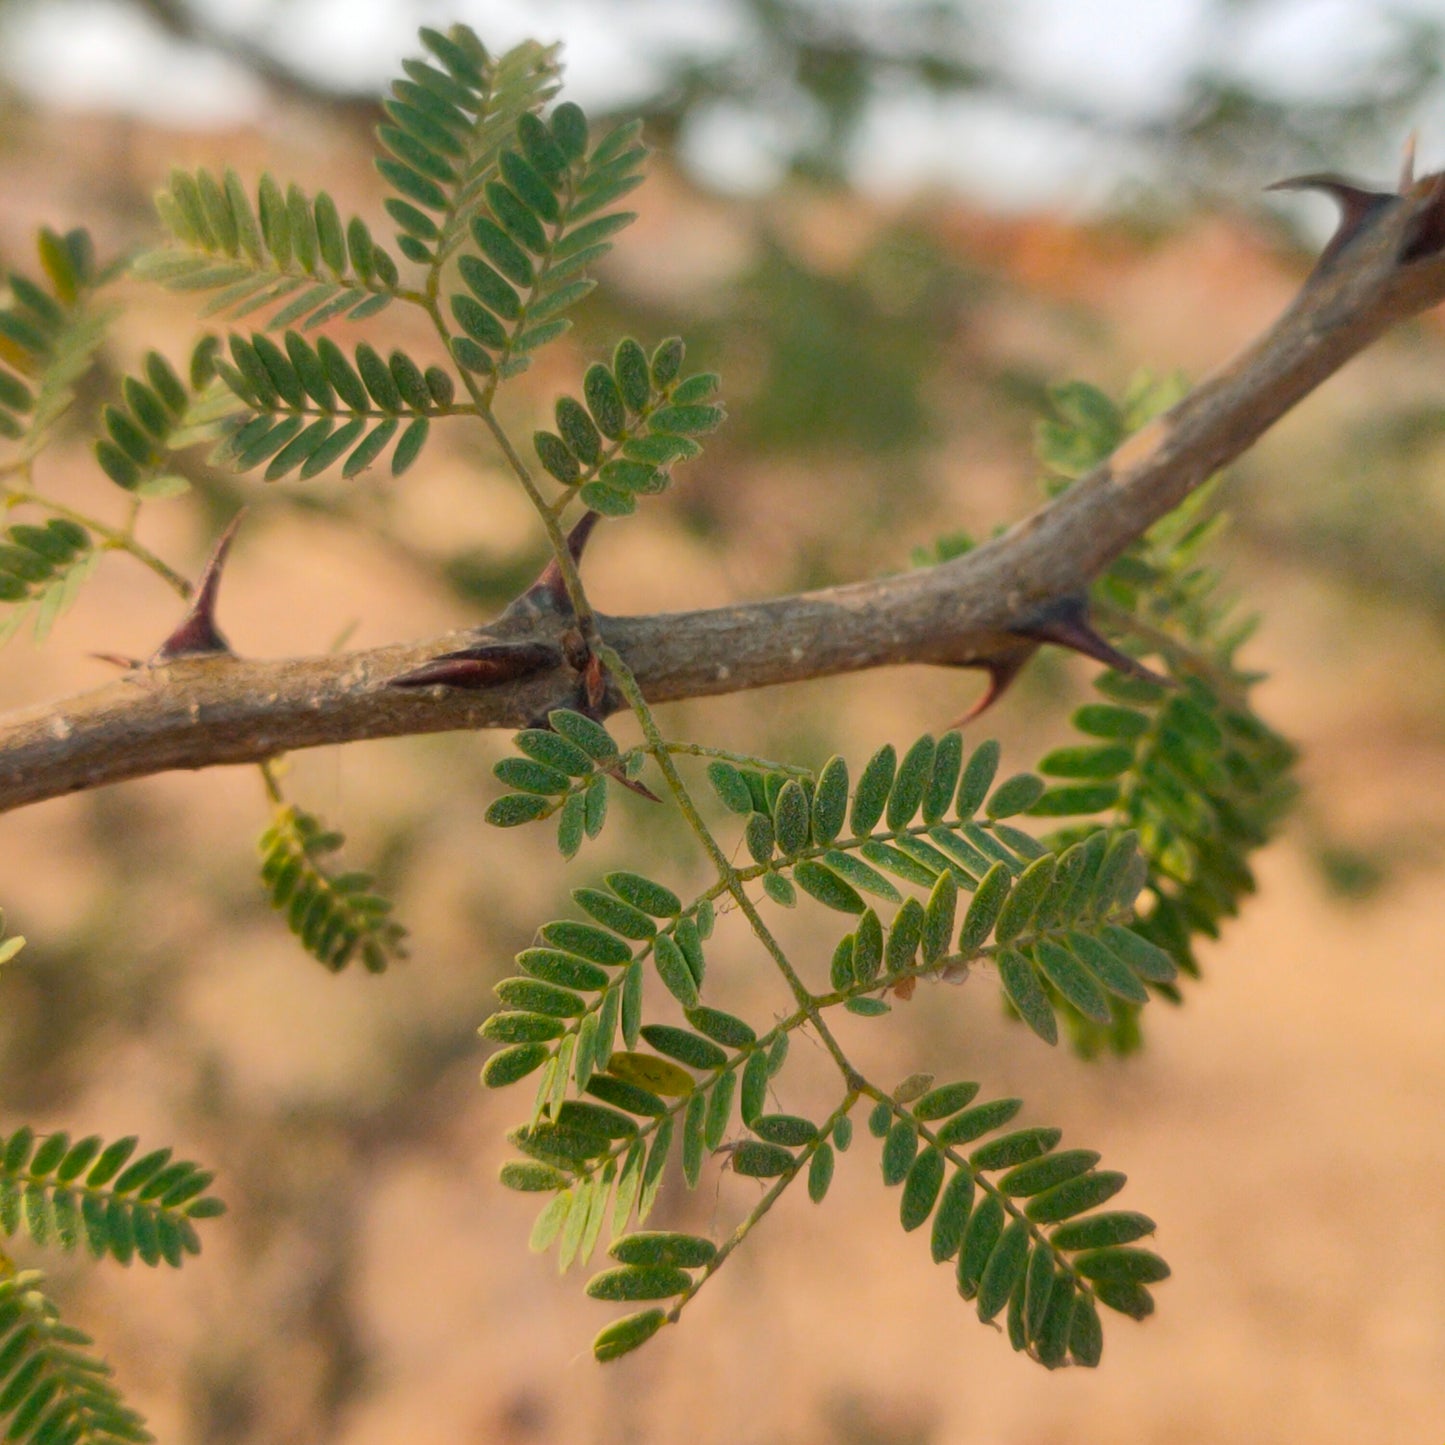 Gum Acacia Gum Arabic Tree (Acacia senegal)